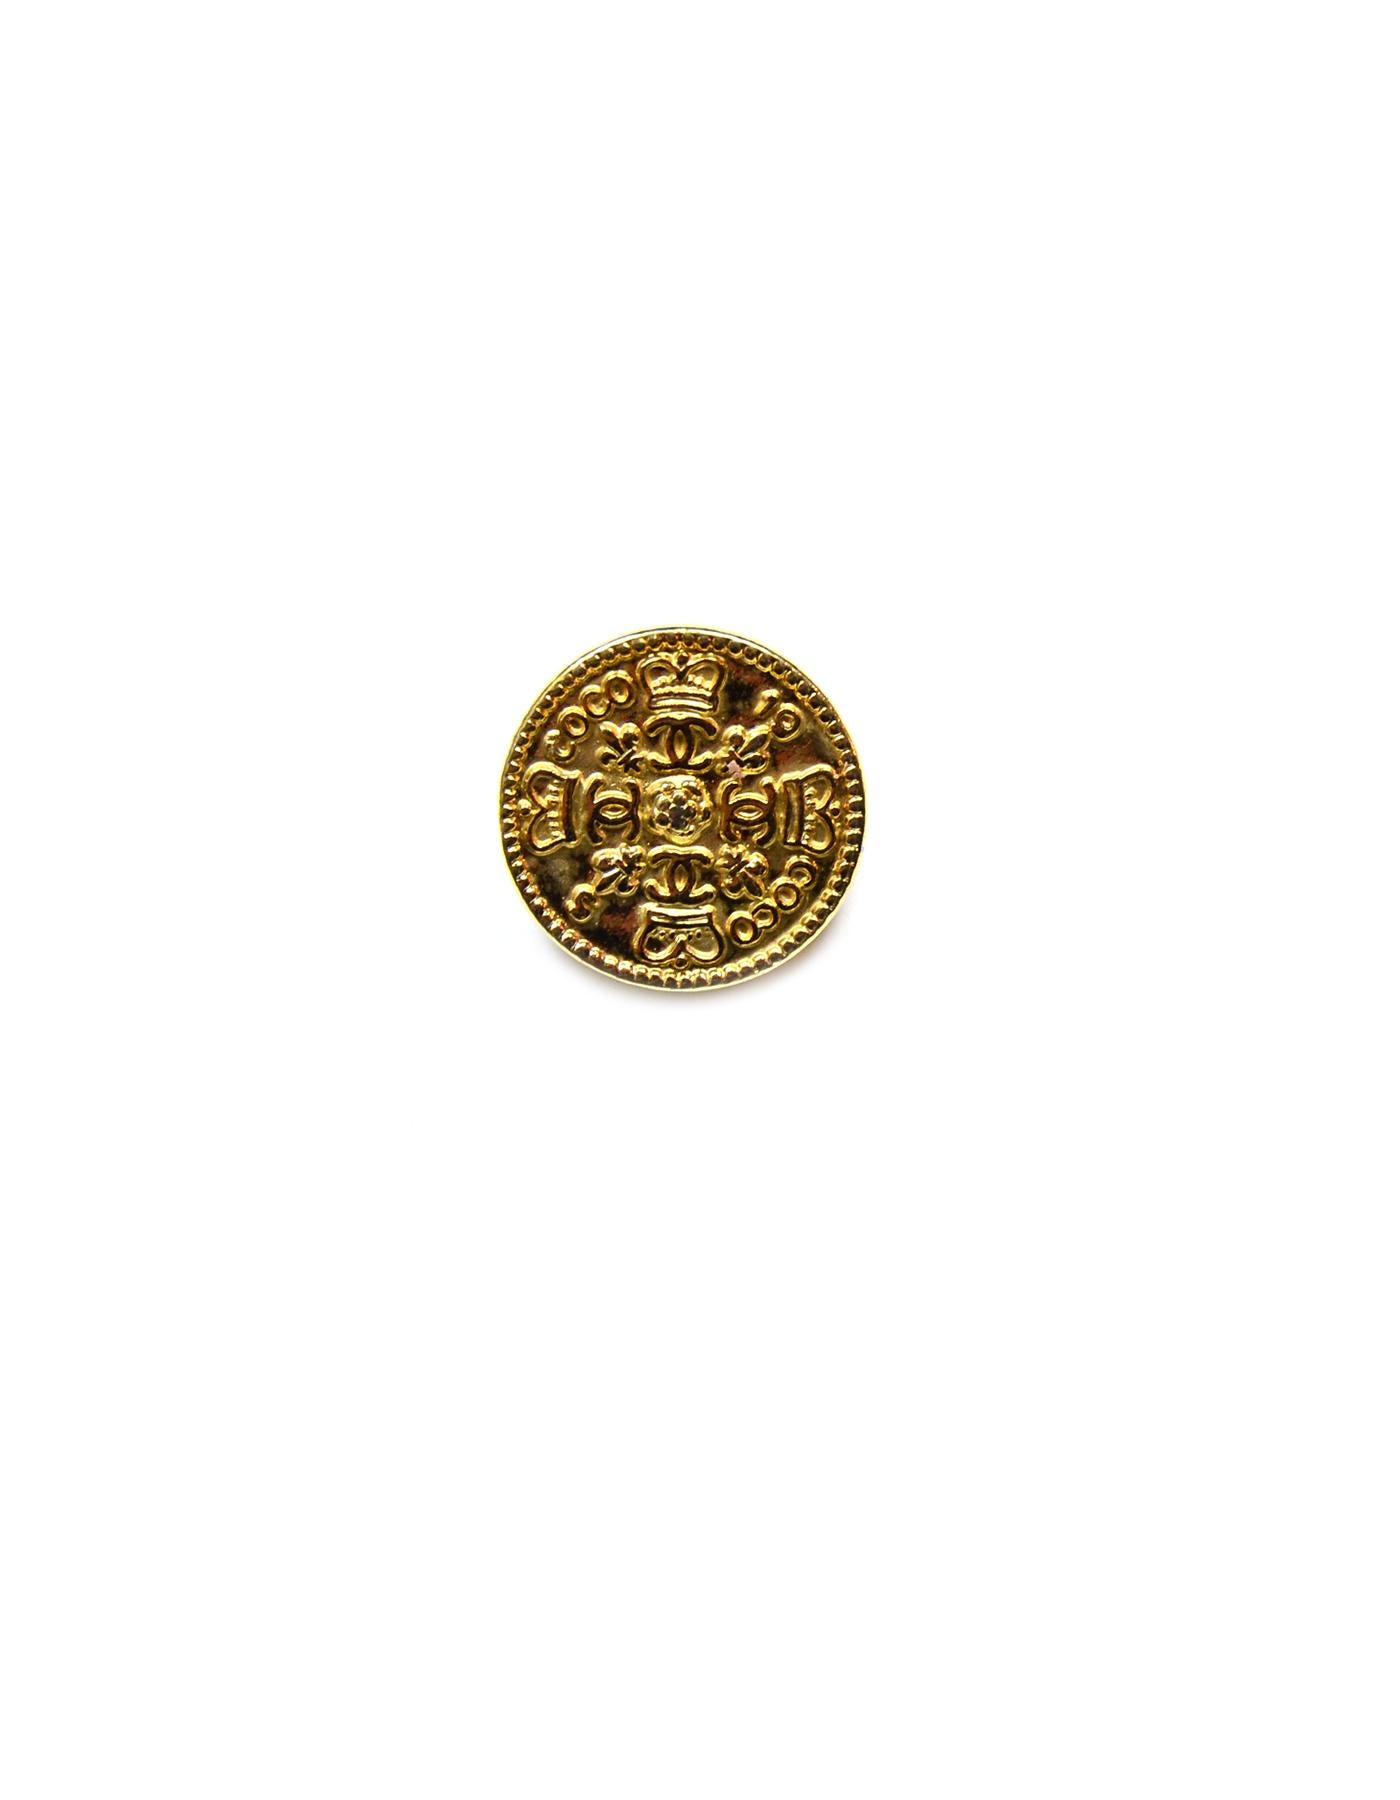 Chanel Goldtone CC Medium Shank Buttons W/ Crowns (Set of 5)

Color: Goldtone
Materials: Goldtone metal
Hallmarks: On back of each button- 